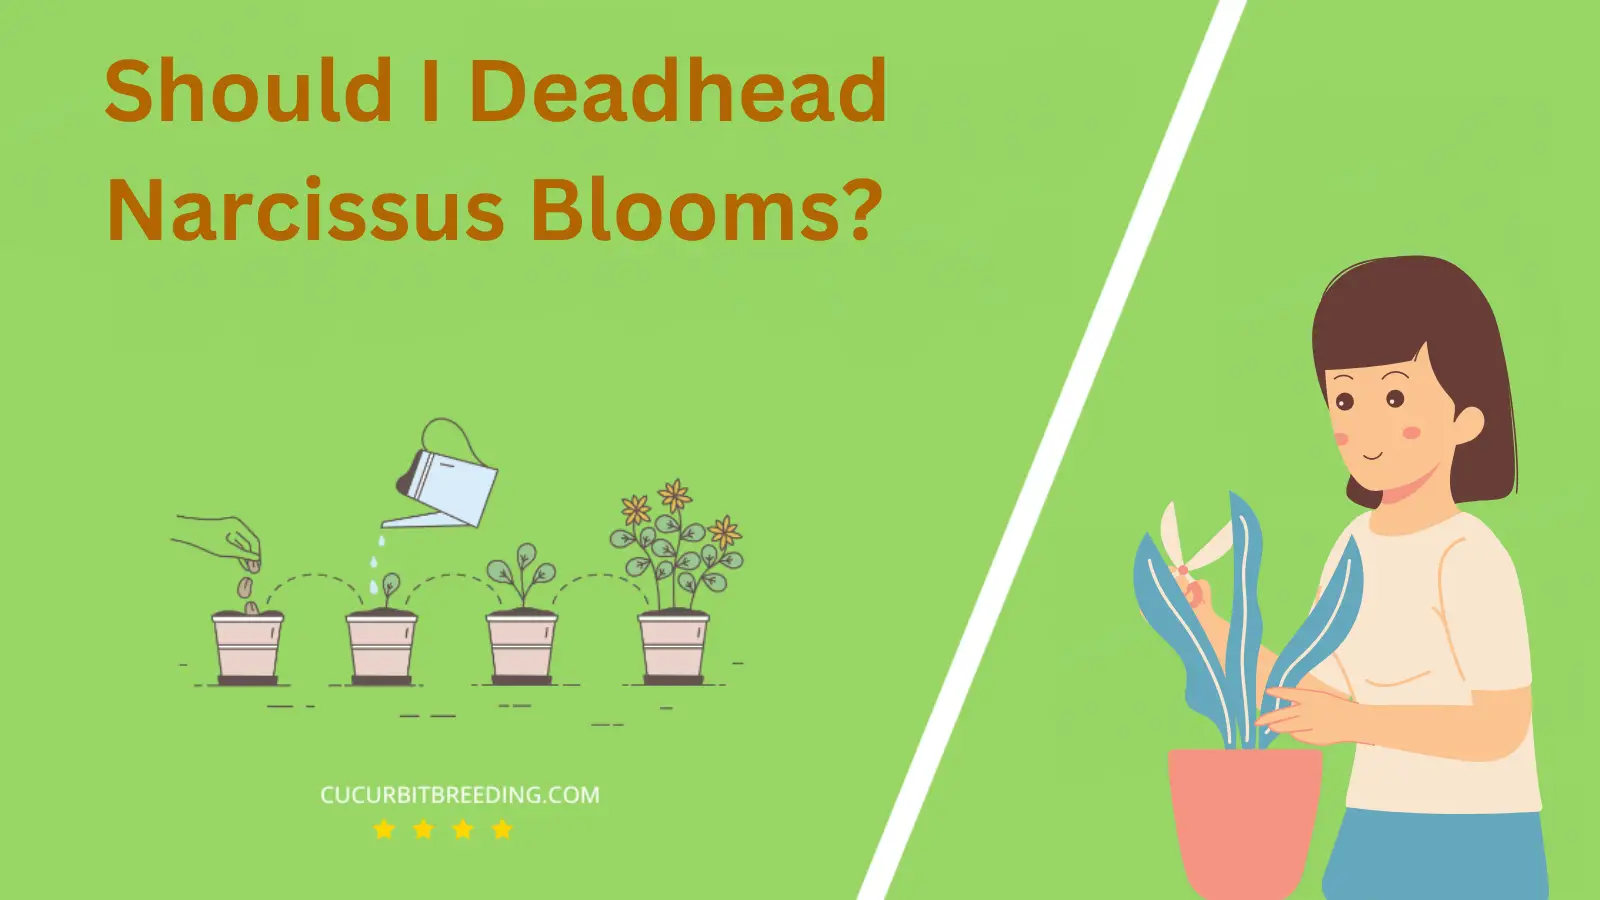 Should I Deadhead Narcissus Blooms?